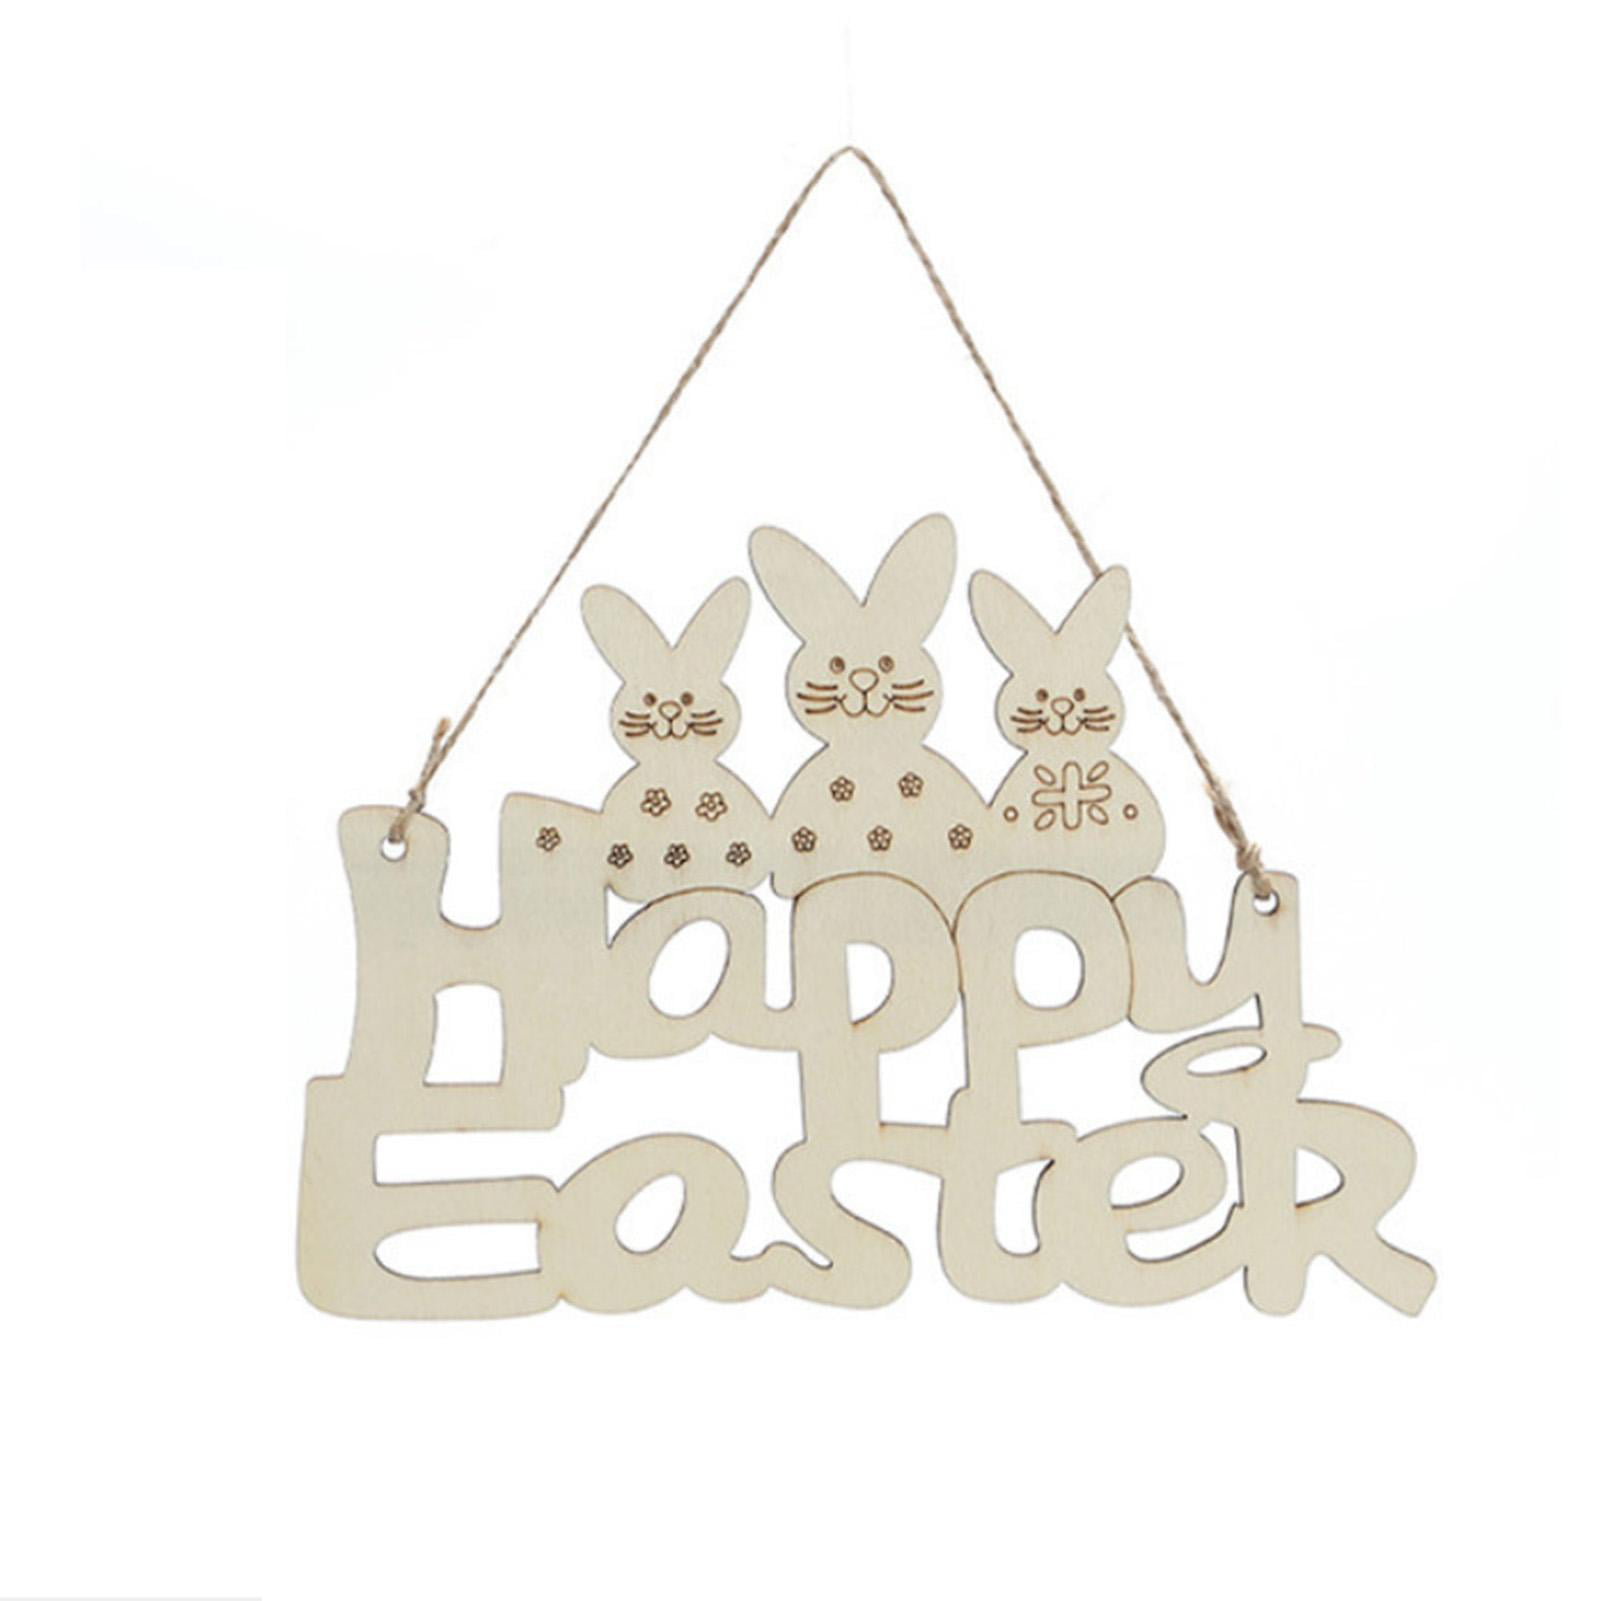 Details about   1xWooden Rabbit Pendant Happy Easter Door Hanging Ornaments Decors Home T3N2 